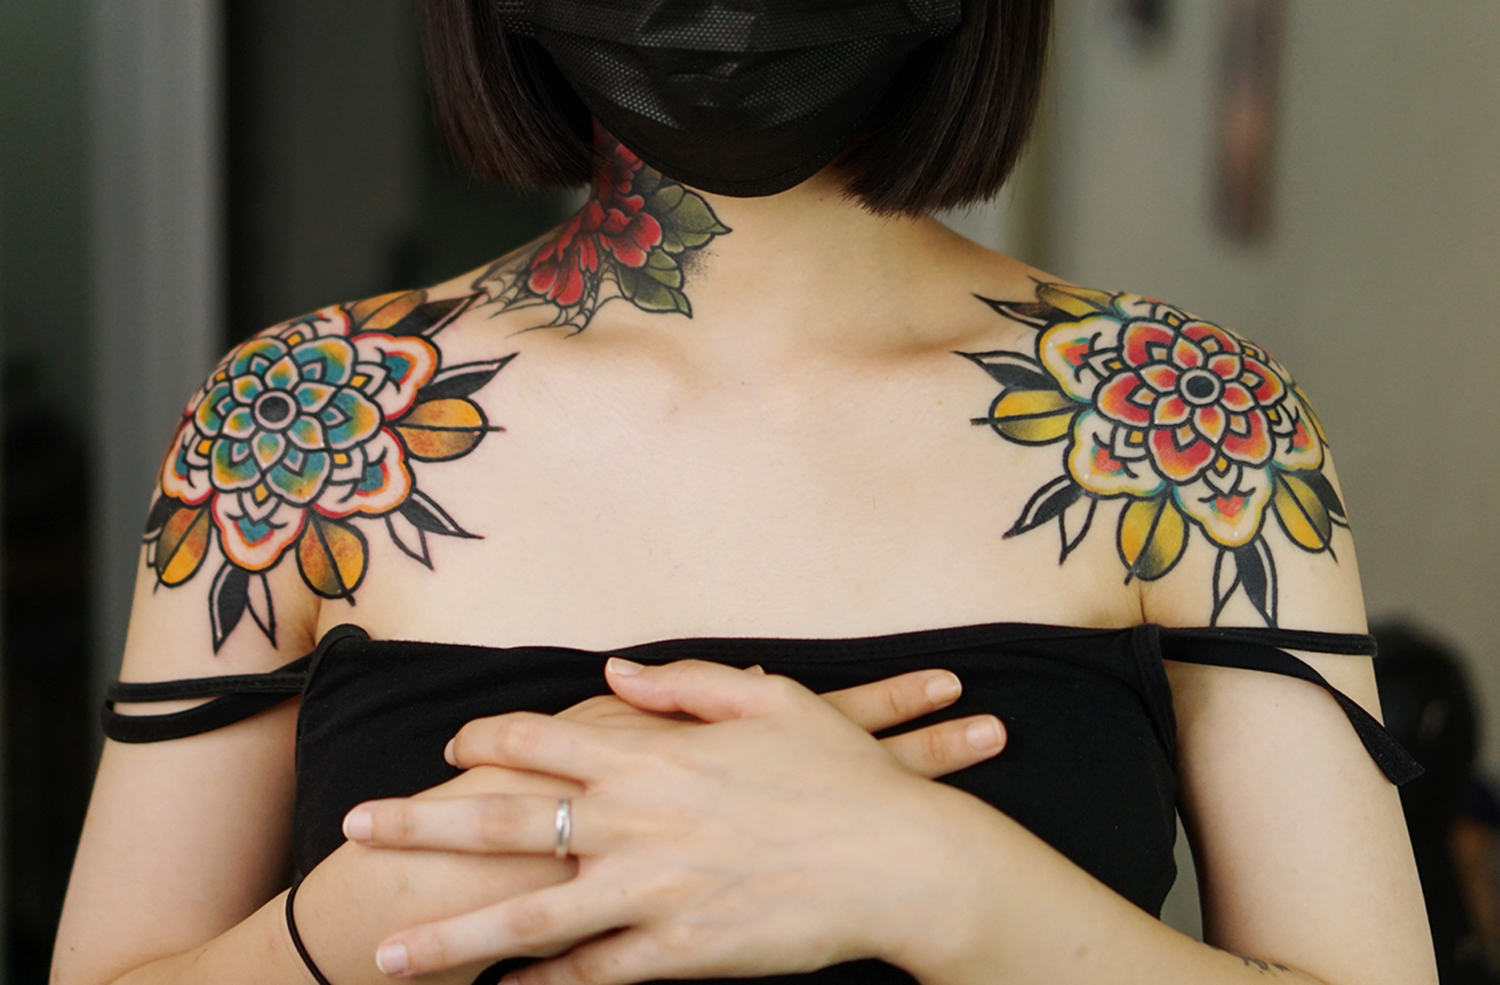 Shoulder, color mandalas, flower like tattoos by kiwa
